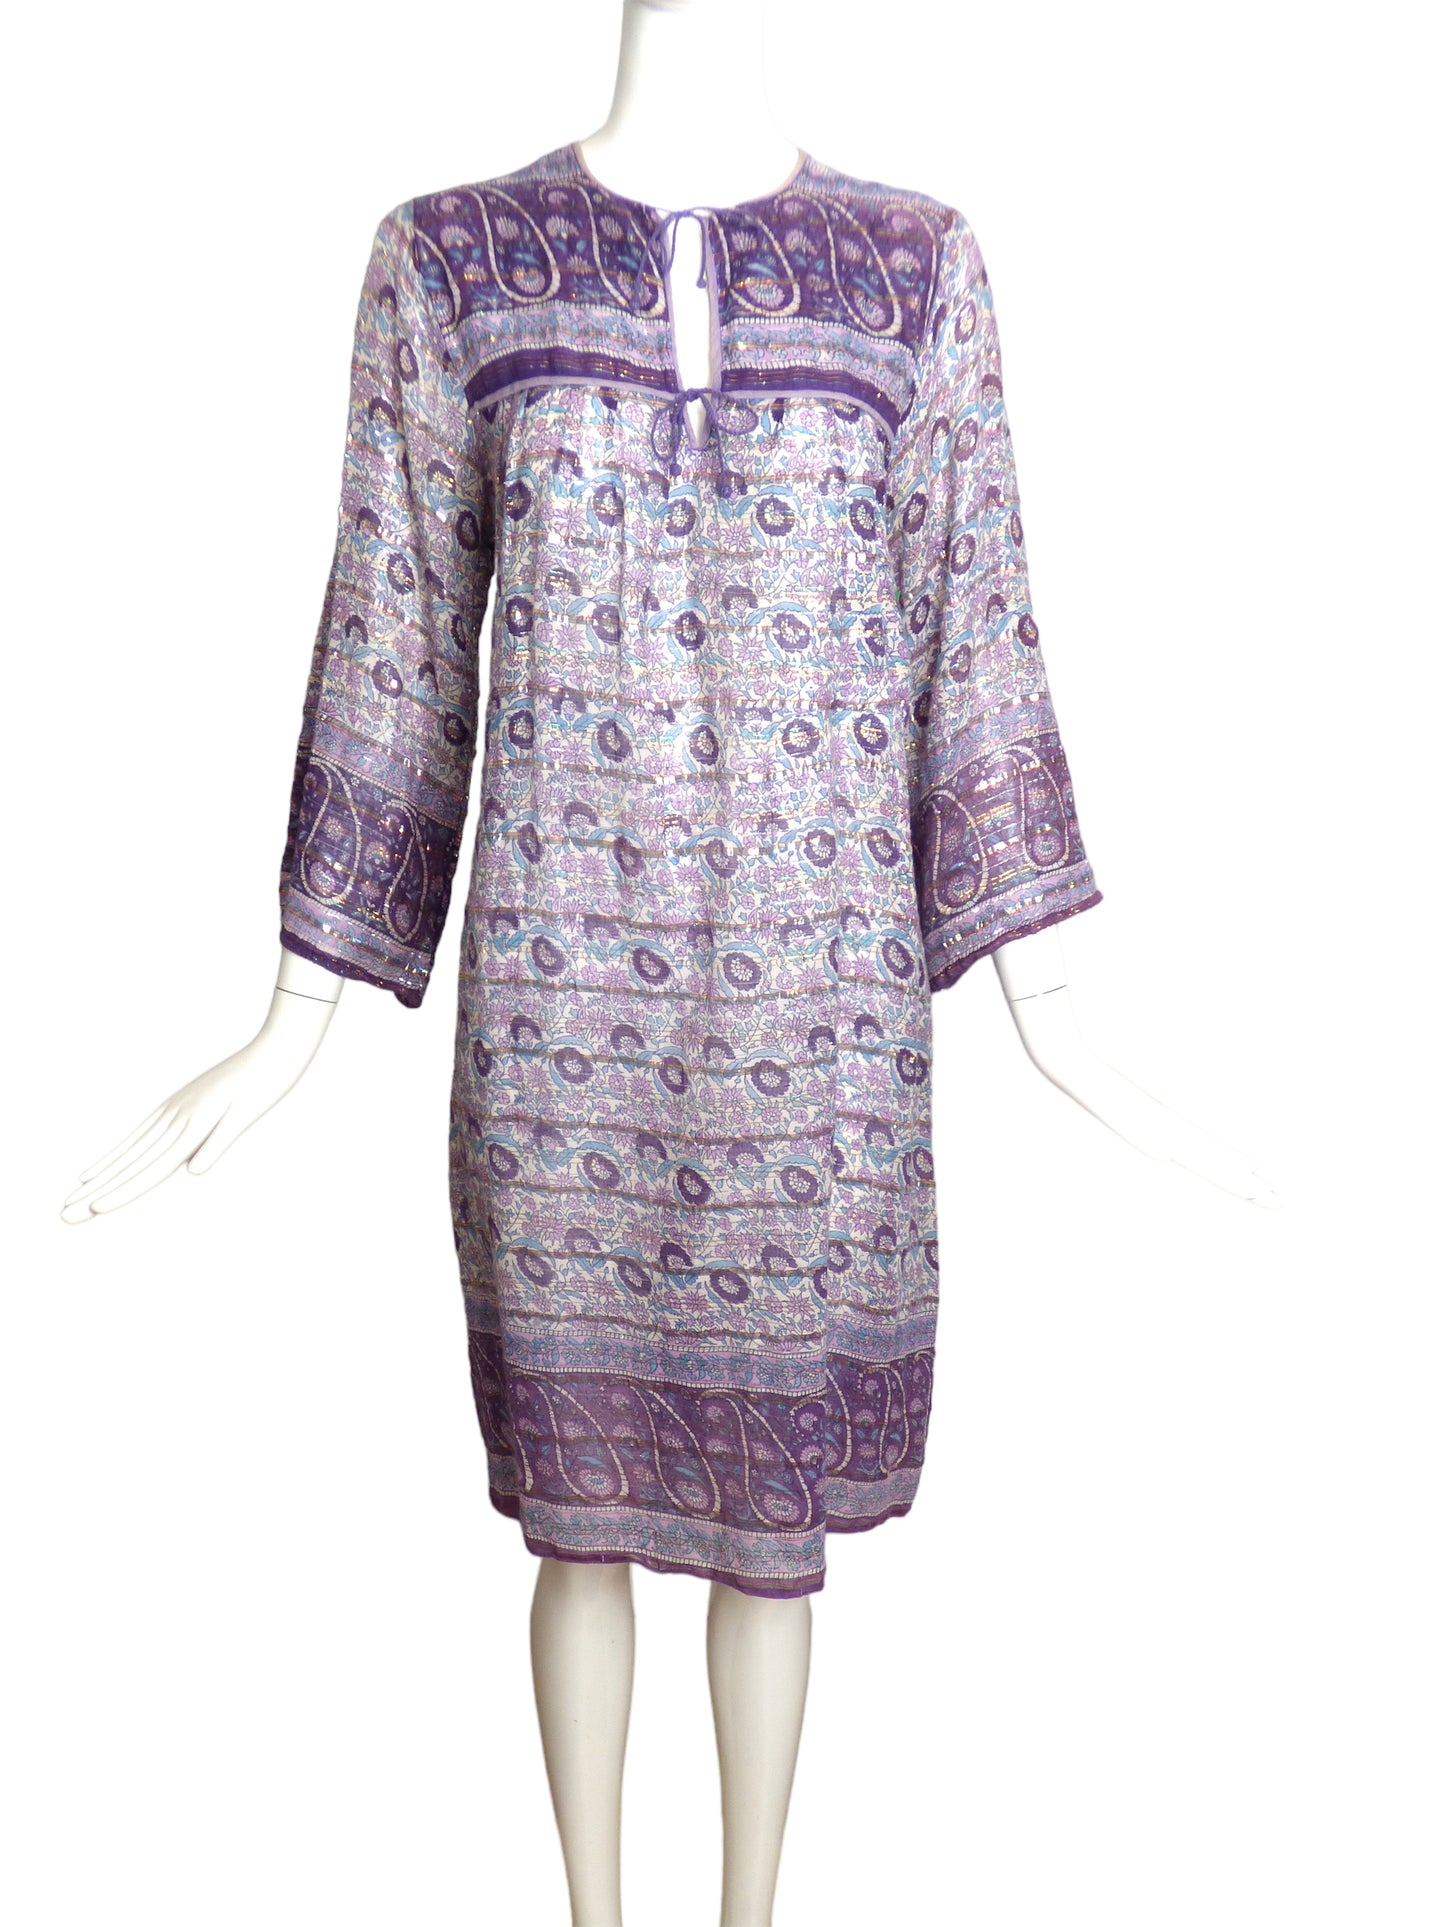 1970s Multi Color Floral Print Boho Dress, Size 8